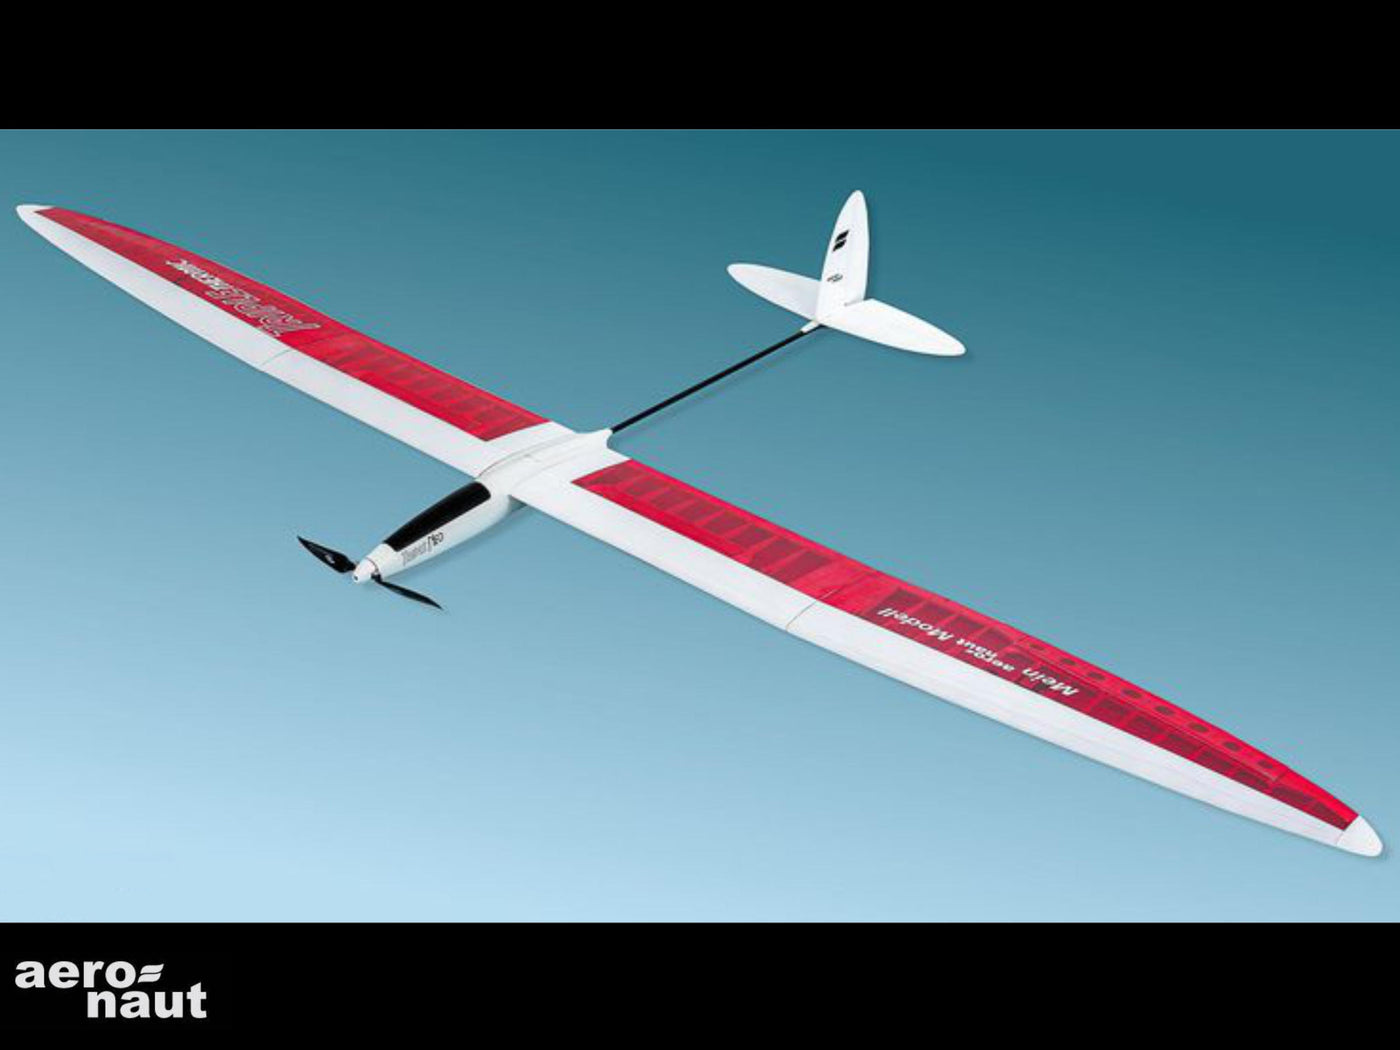 Aero-naut Triple Neo Thermic 2.5m Electric / Glider